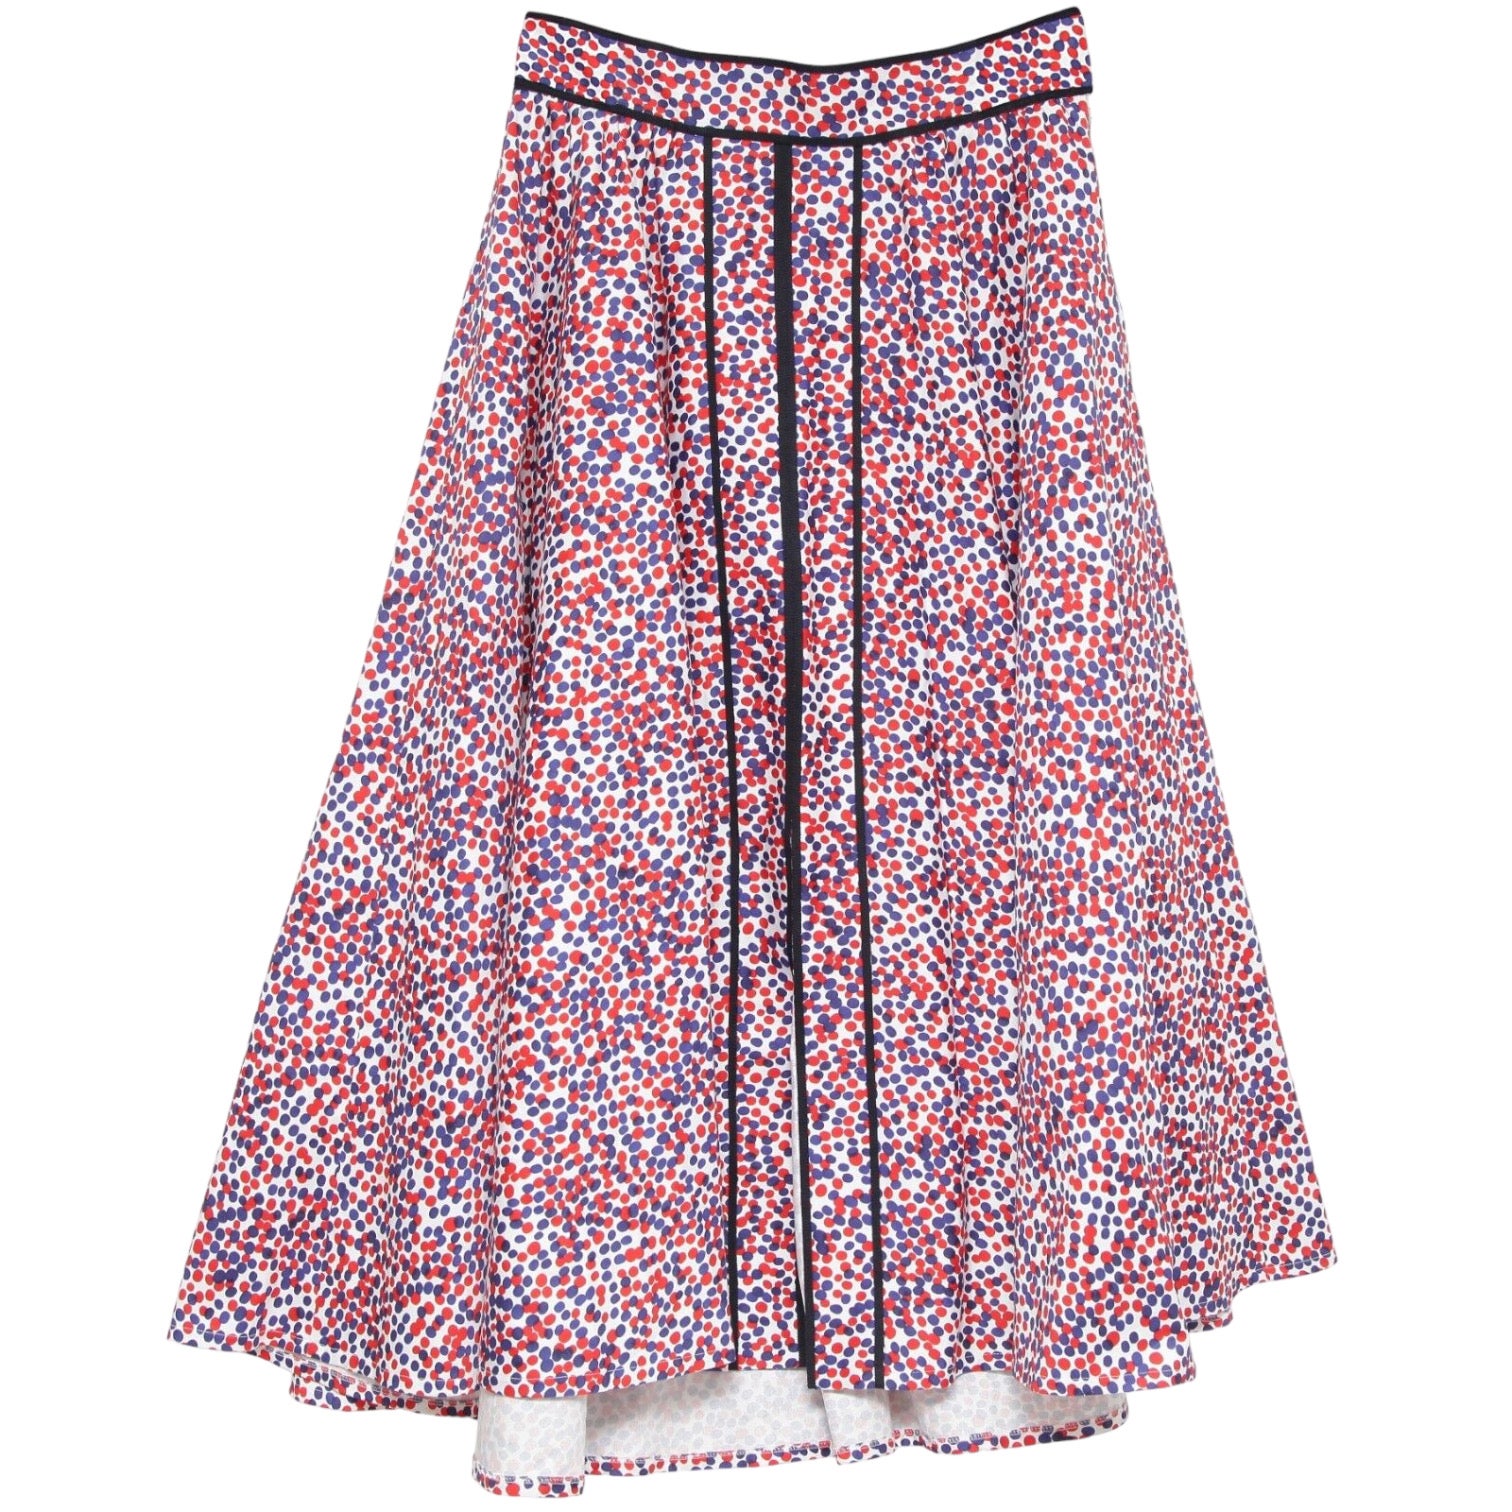 CAROLINA HERRERA Skirt Umbrella Polka Dot Full Maxi Cotton Blend Dress Sz 8 For Sale